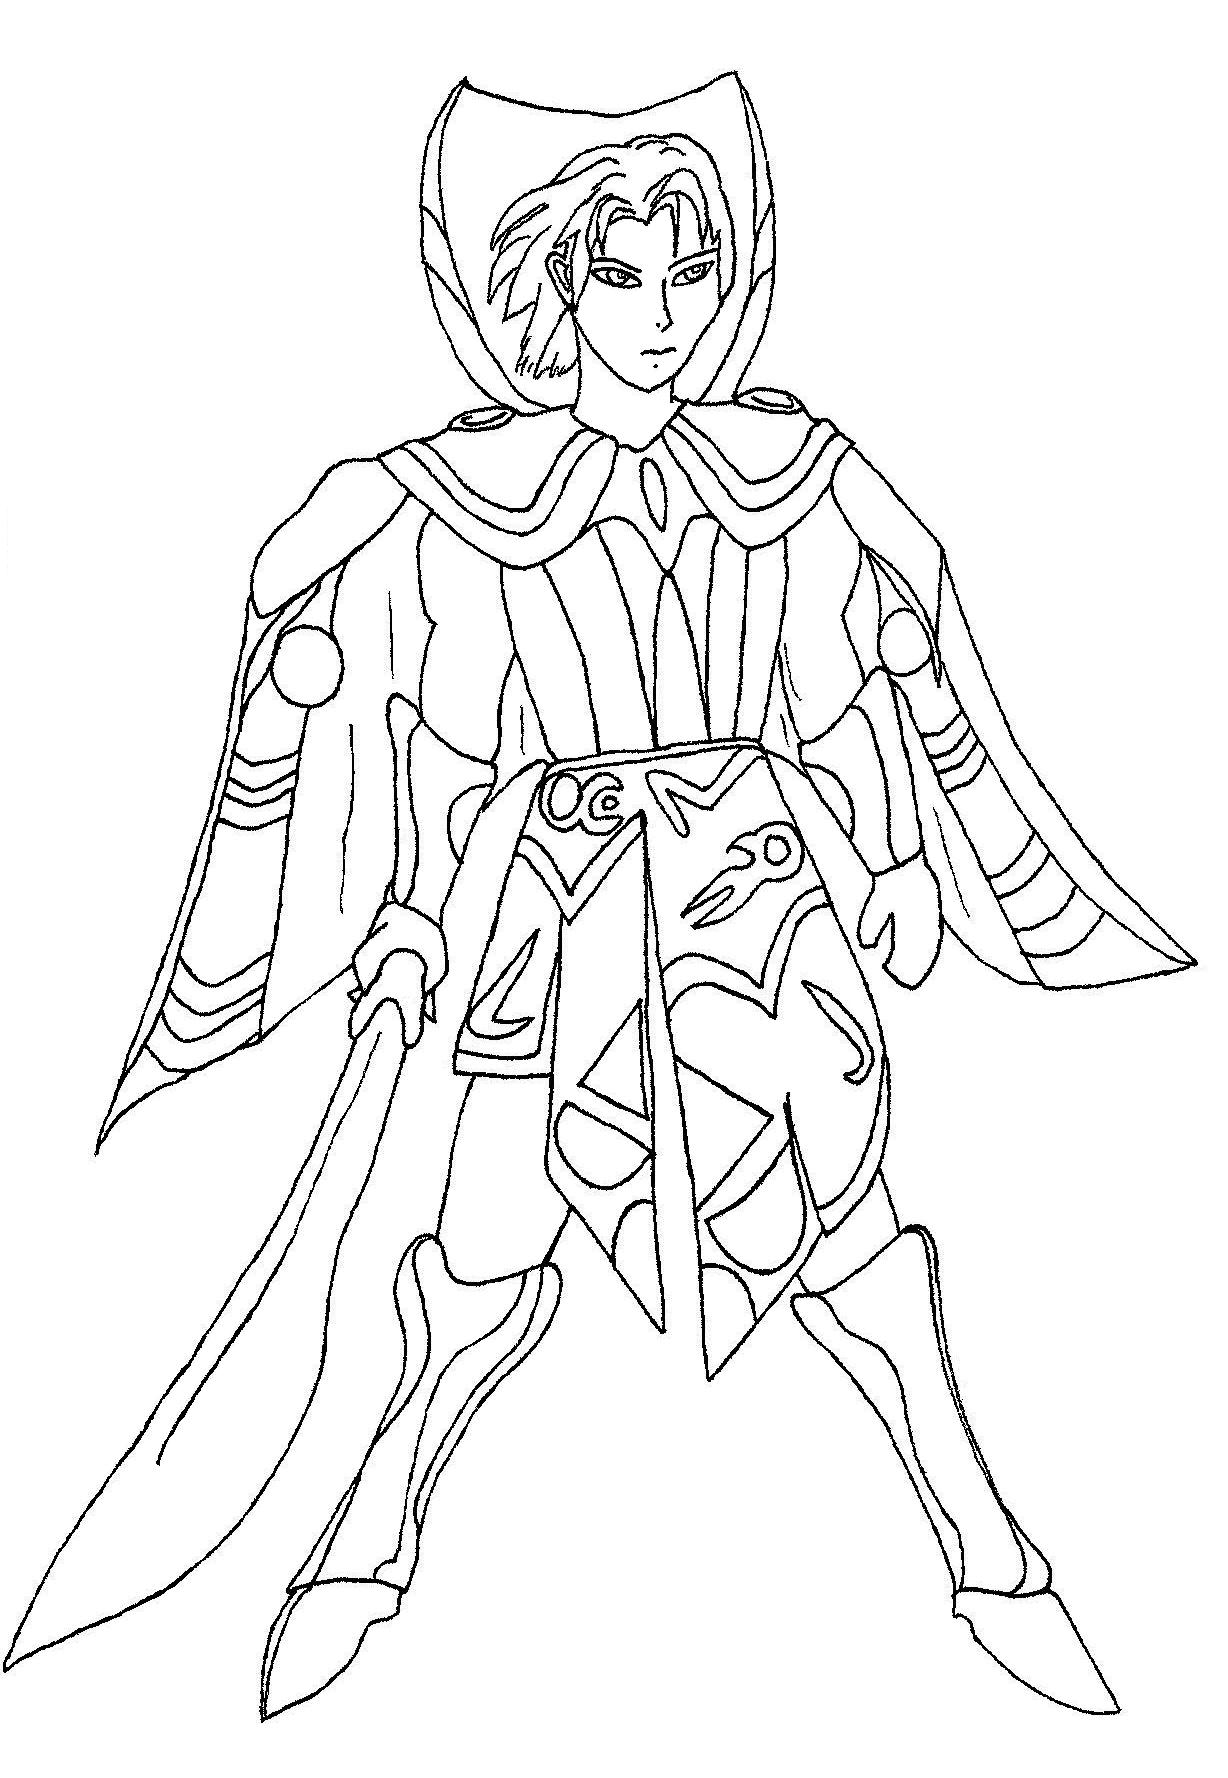 Lloyd in Wingly Armor by AirNymphSS